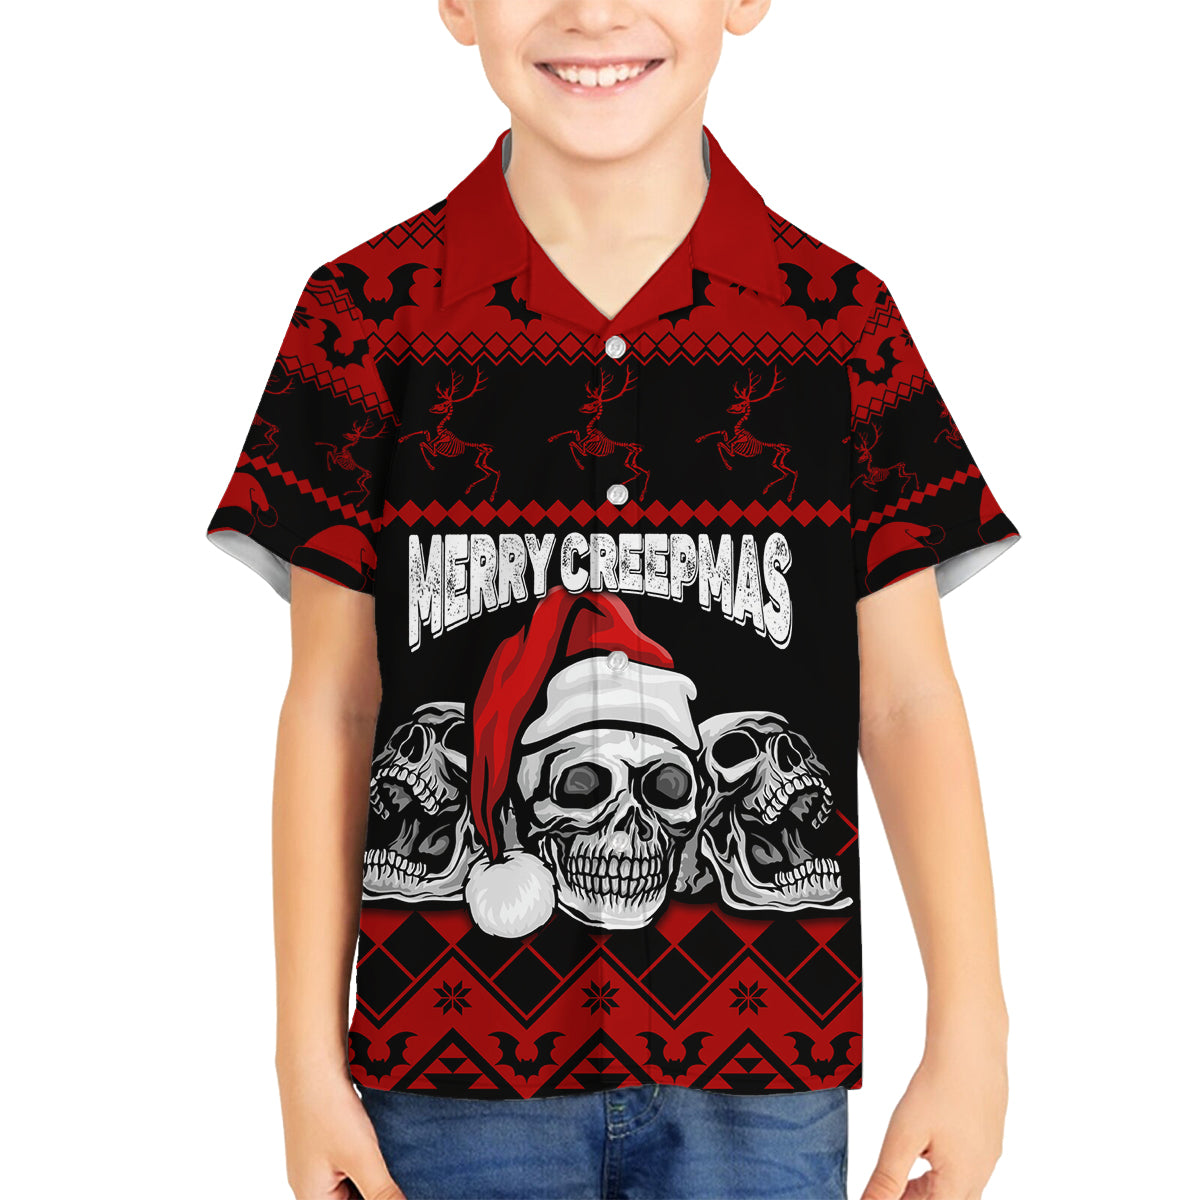 custom-christmas-family-matching-off-shoulder-long-sleeve-dress-and-hawaiian-shirt-gothic-skull-creepmas